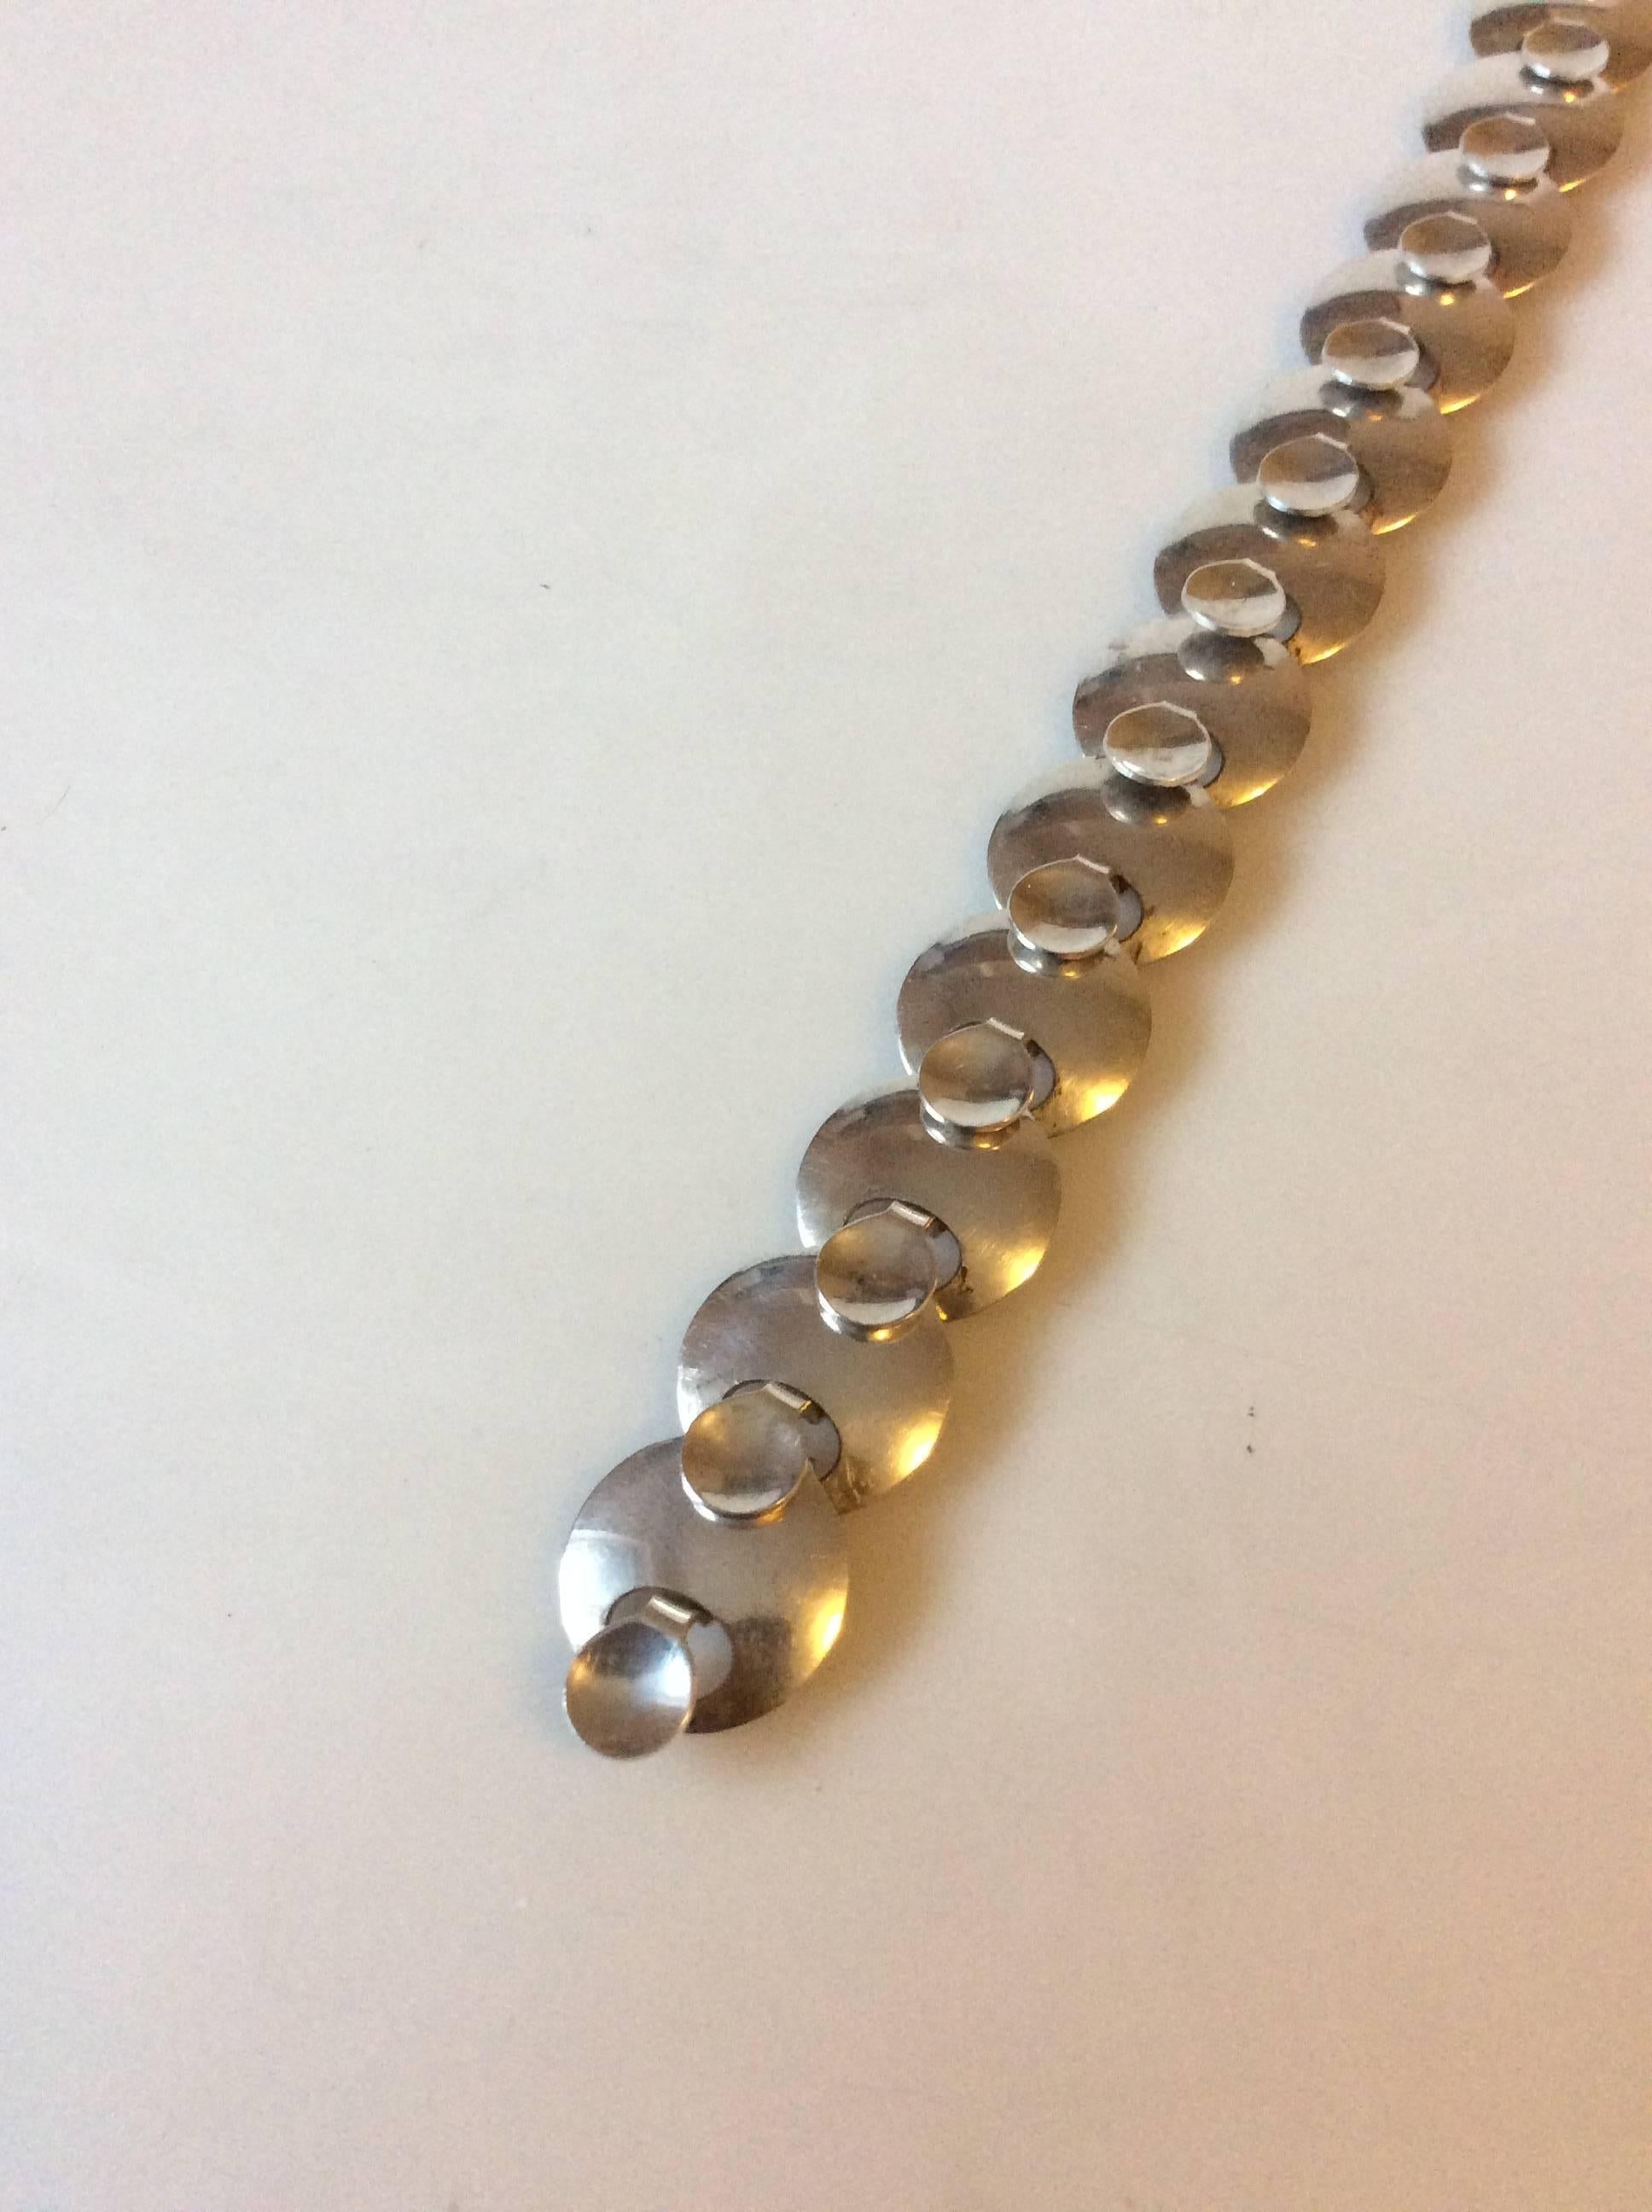 Georg Jensen Sterling Silver Bracelet by Ibe Dahlquist no. 172.

Measures 19cm / 7 1/2